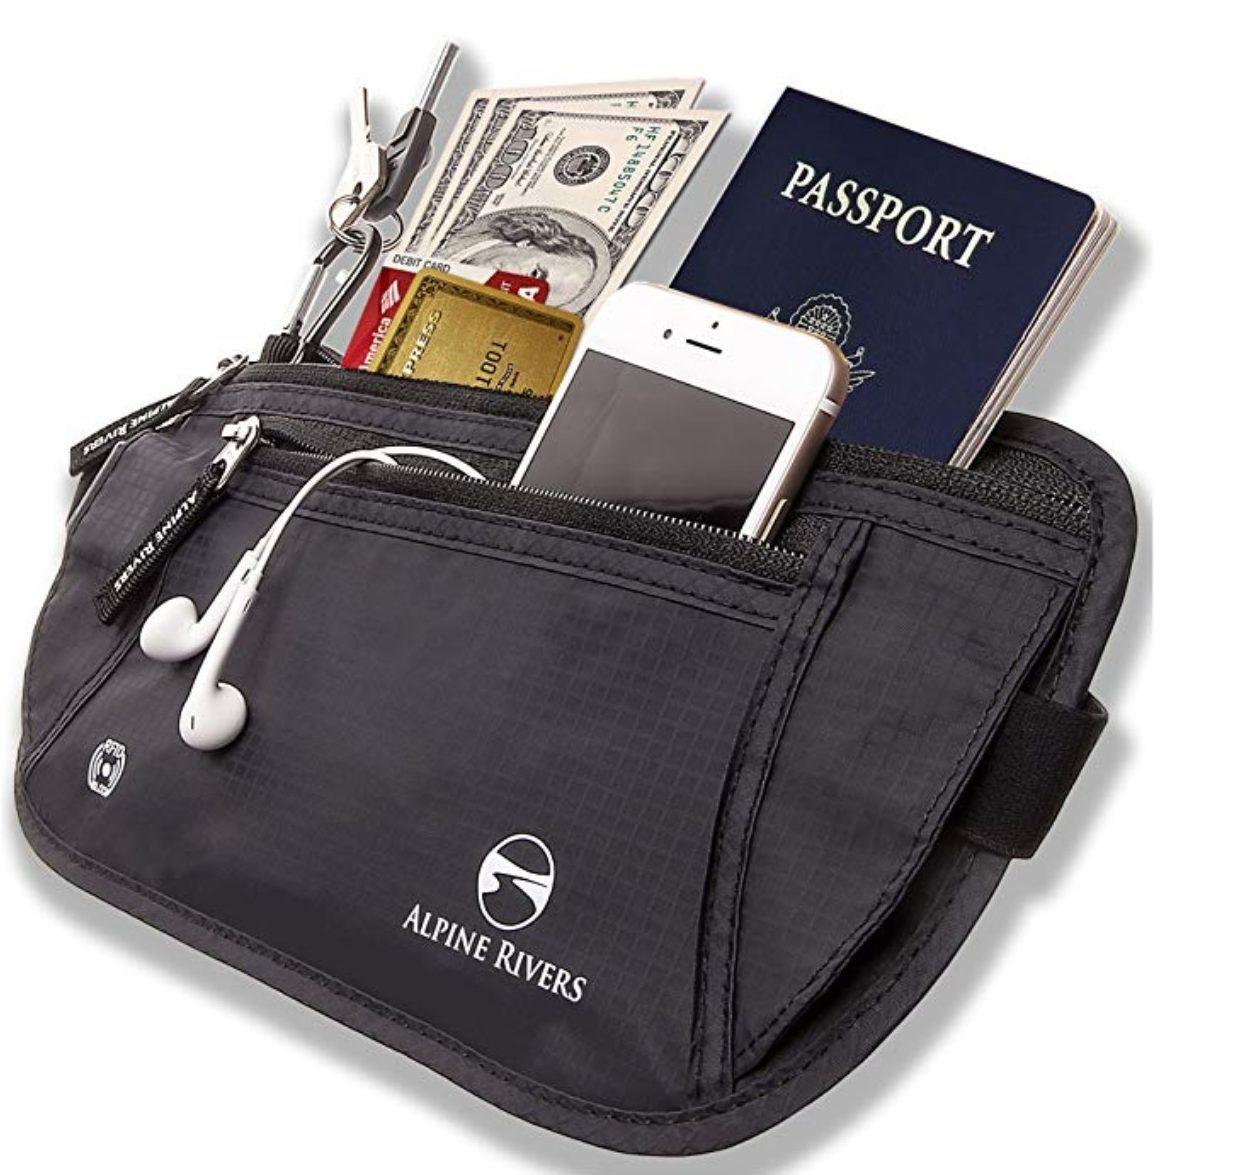 money belt international travel